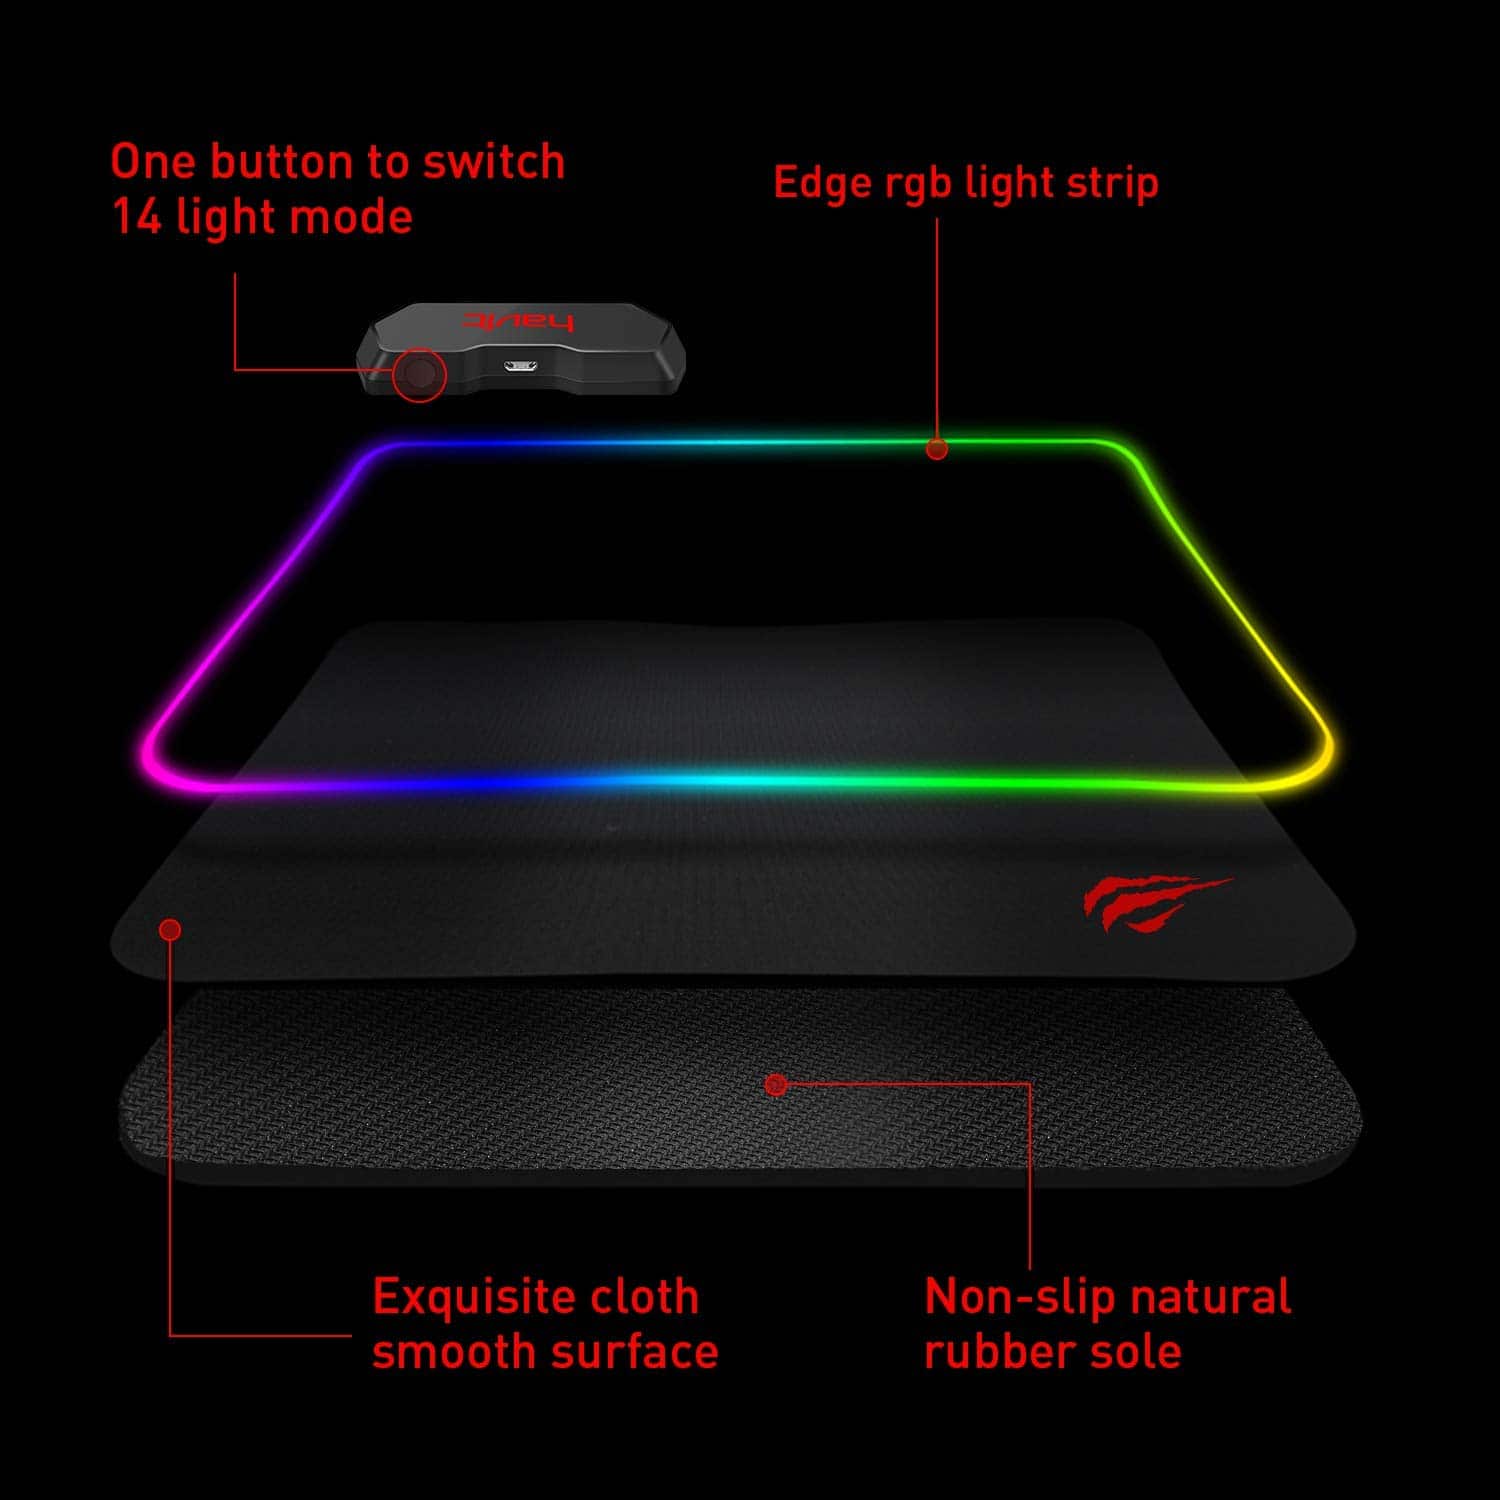 HAVIT MP902 RGB Mouse Pad